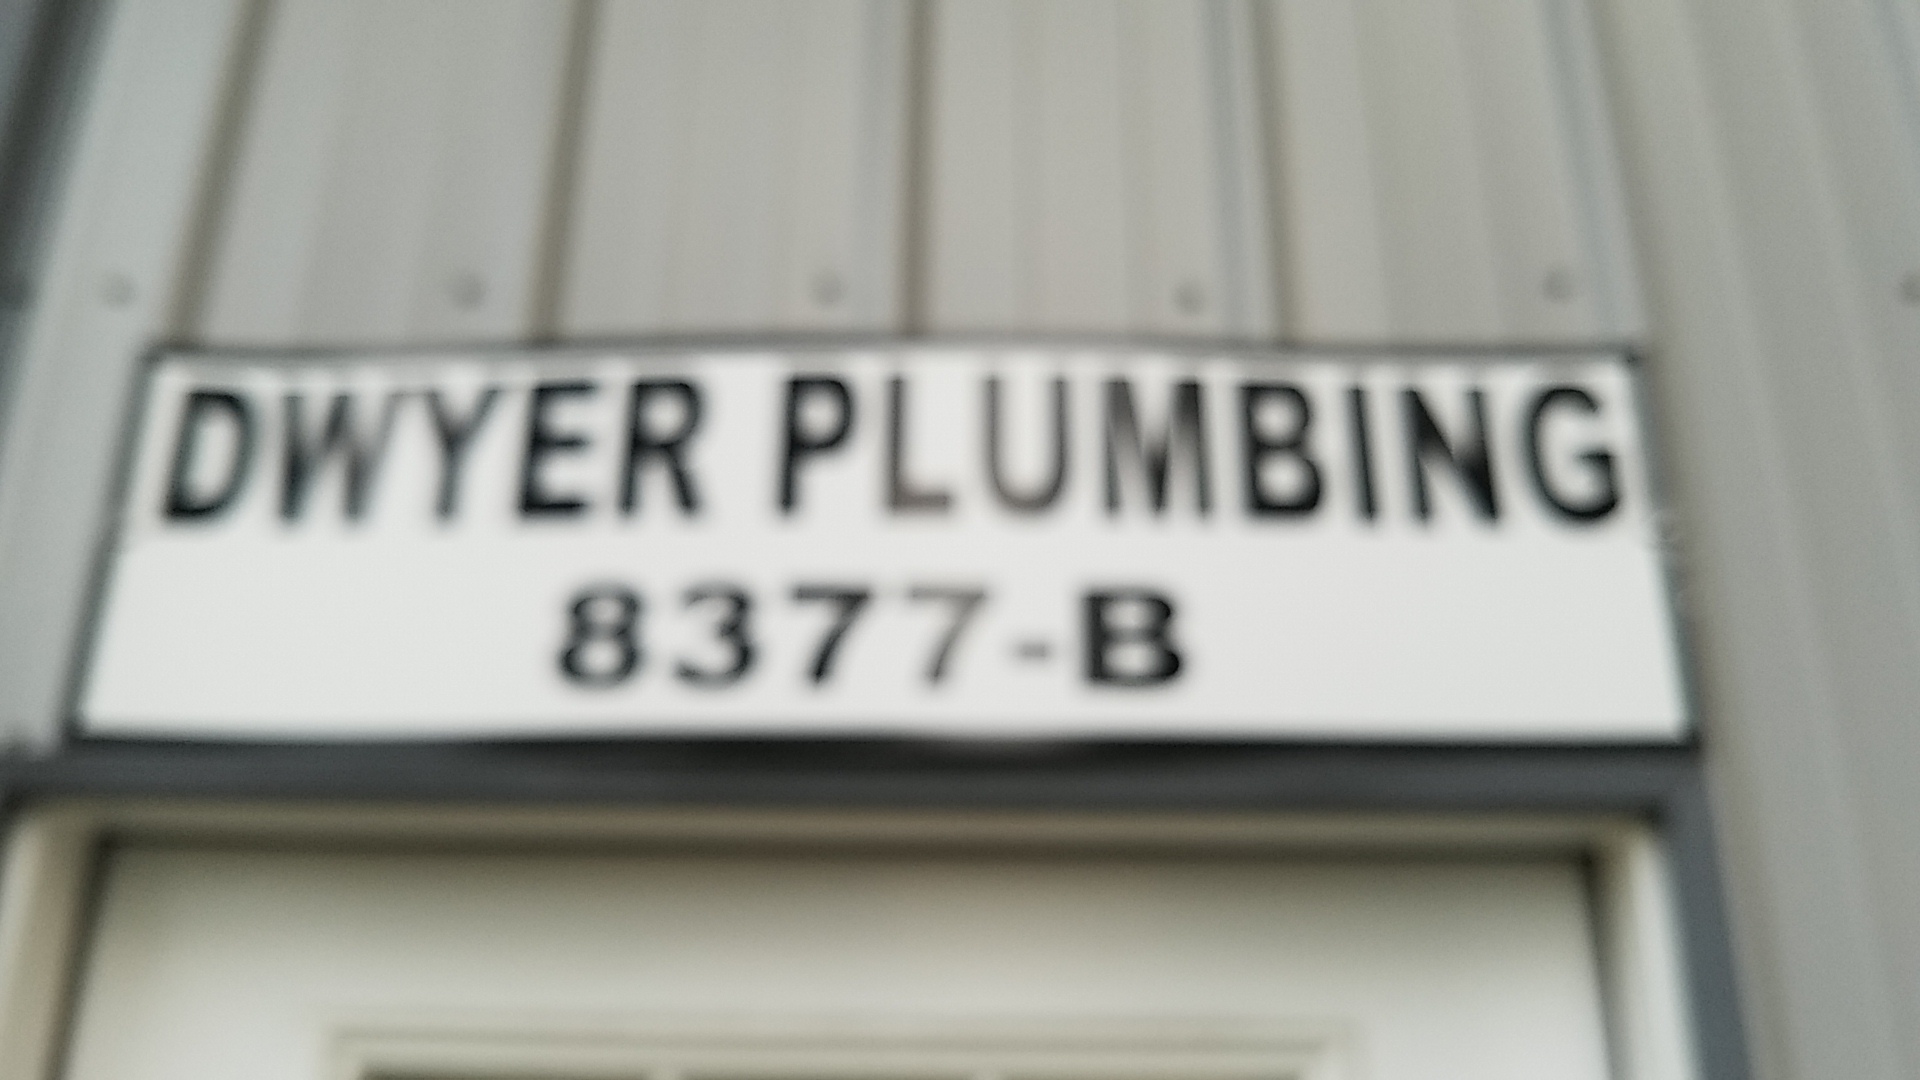 Dwyer Plumbing Inc